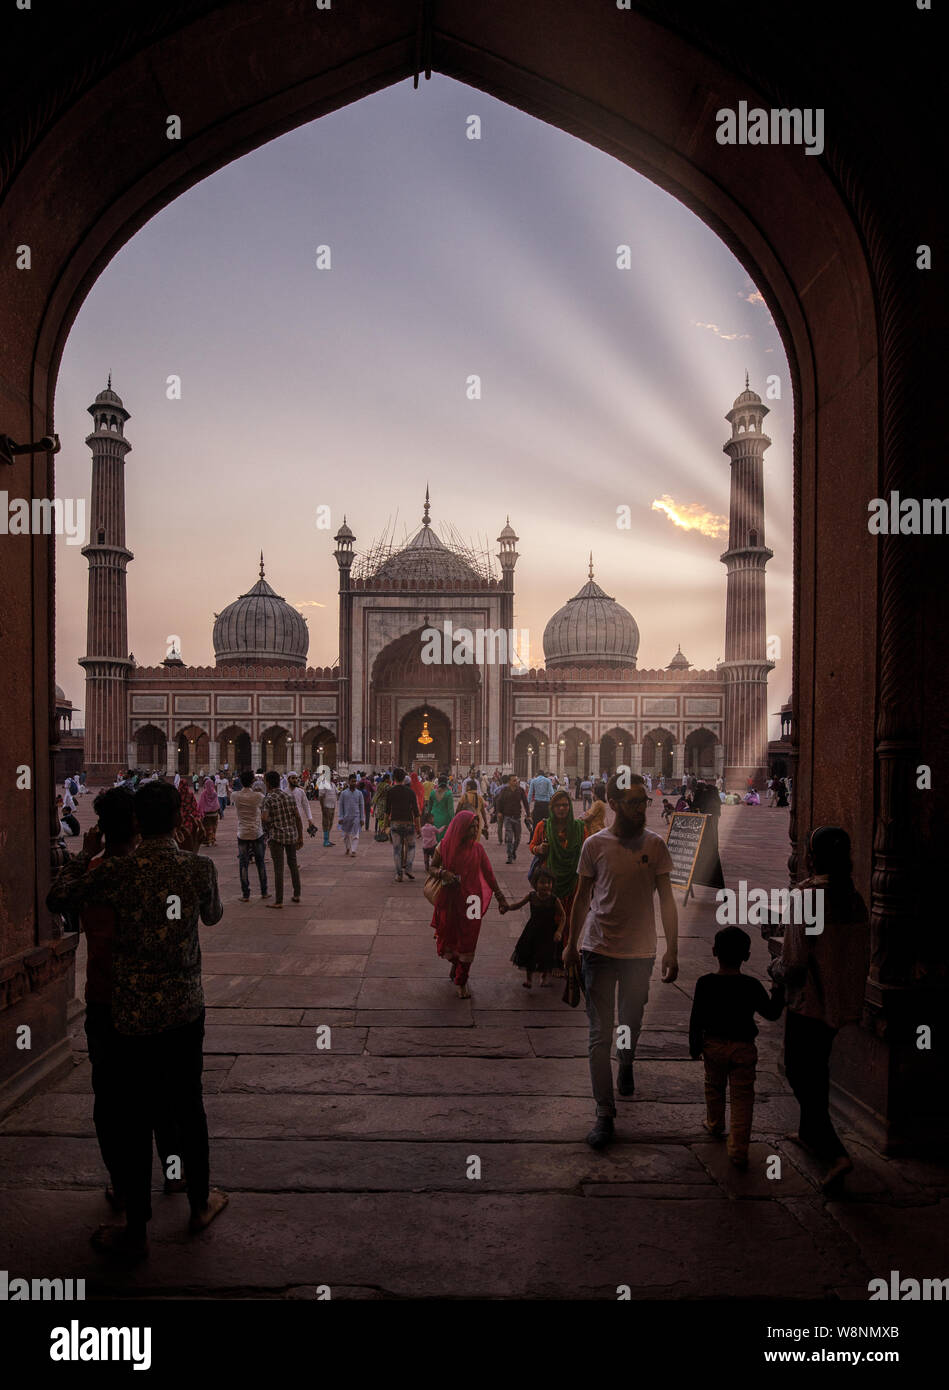 Entrance to Jama Masjid (Friday Mosque) at sunset, Old Delhi, Delhi, India Stock Photo